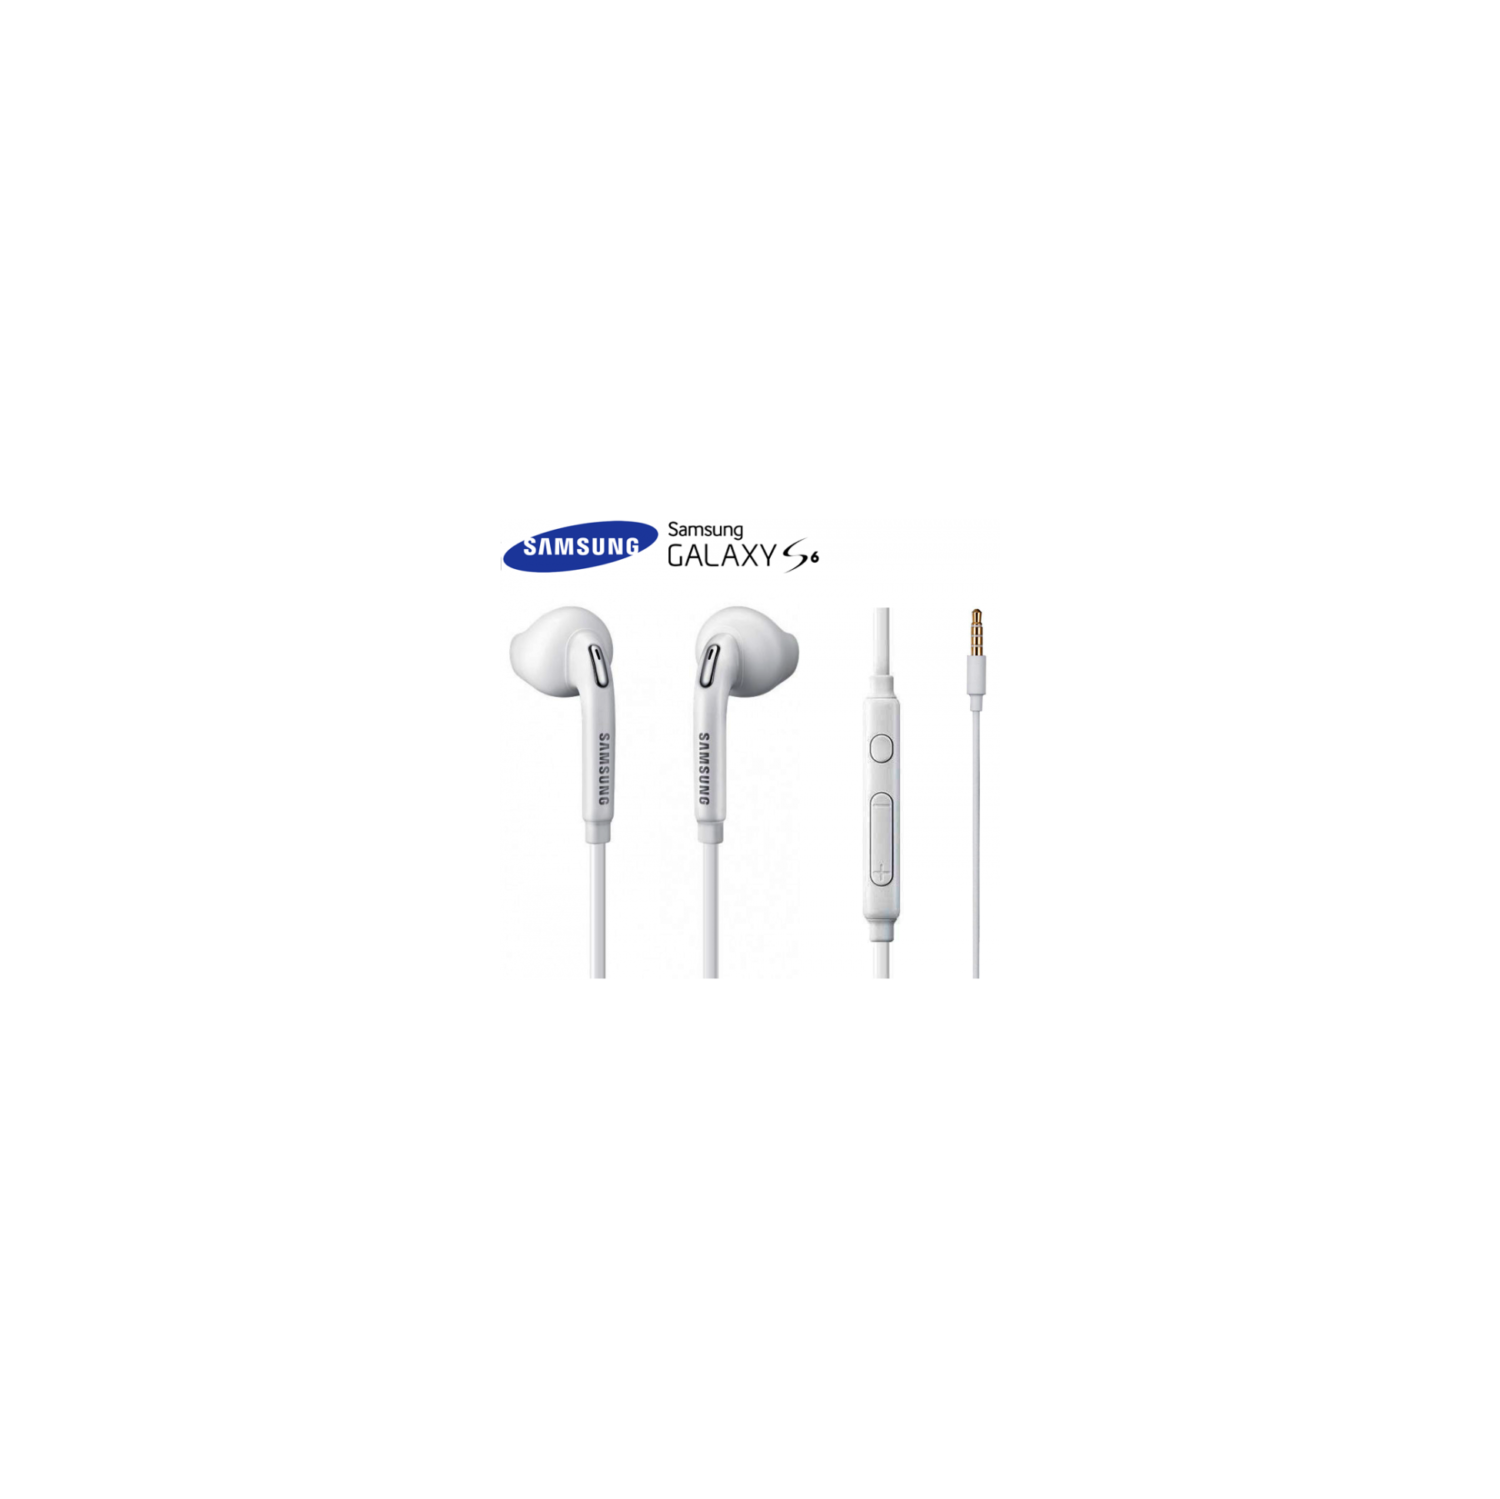 ( 4 packs ) Samsung Galaxy Earphones Headphones Earbuds Headset For Samsung Galaxy S5 S6 S6 Edge+ Note 4 5 3.5mm